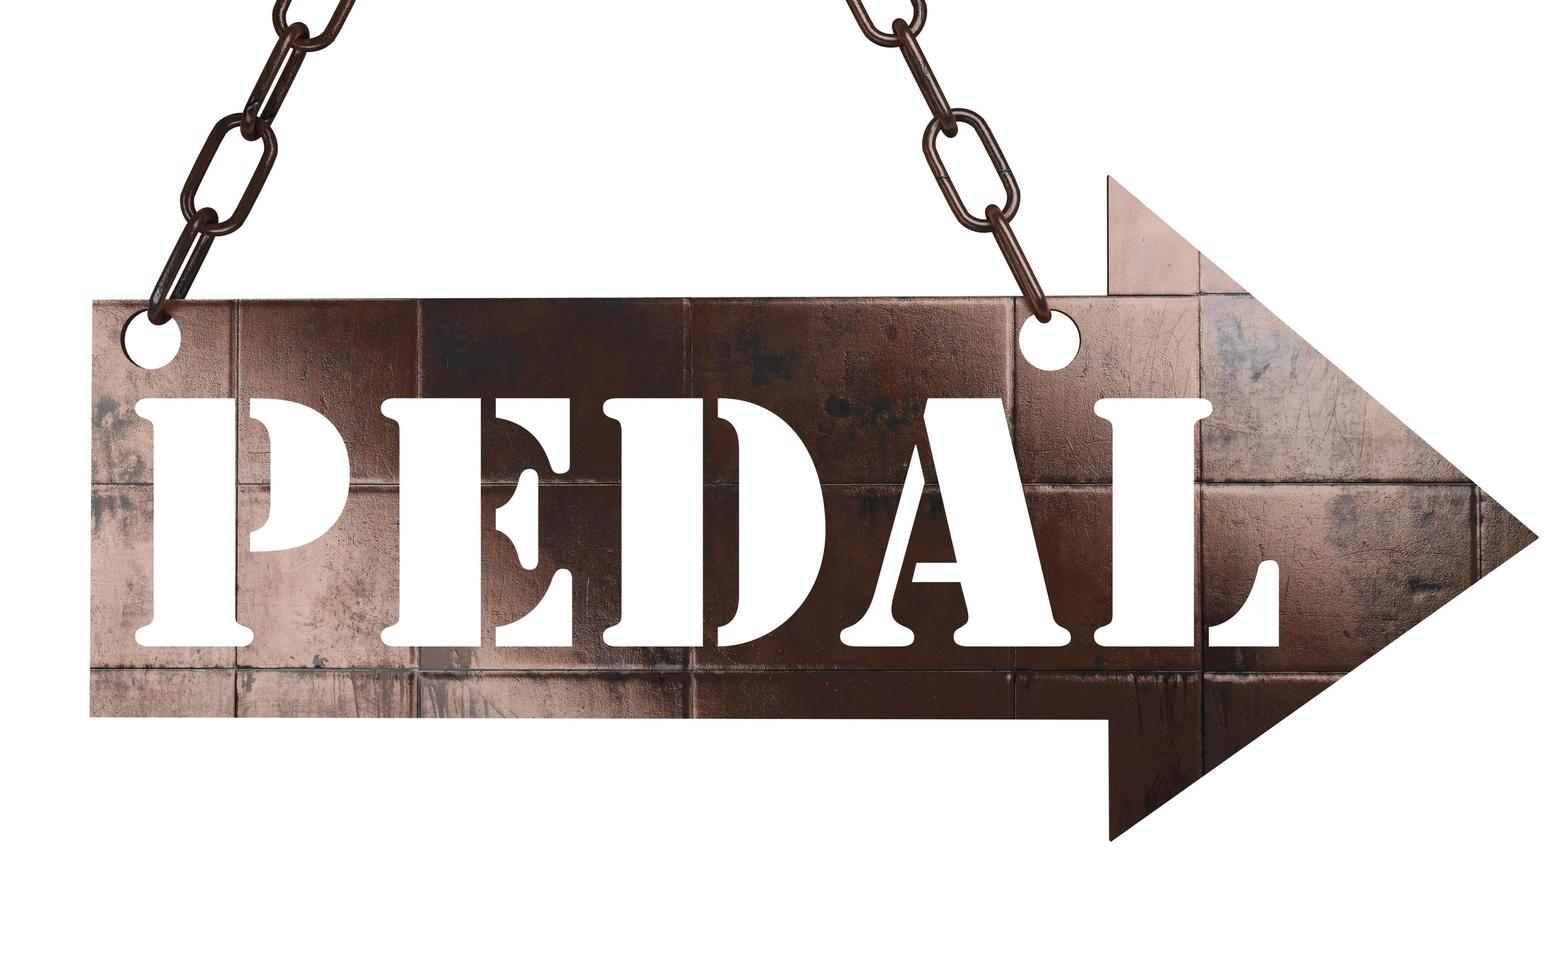 Palabra de pedal en puntero de metal foto